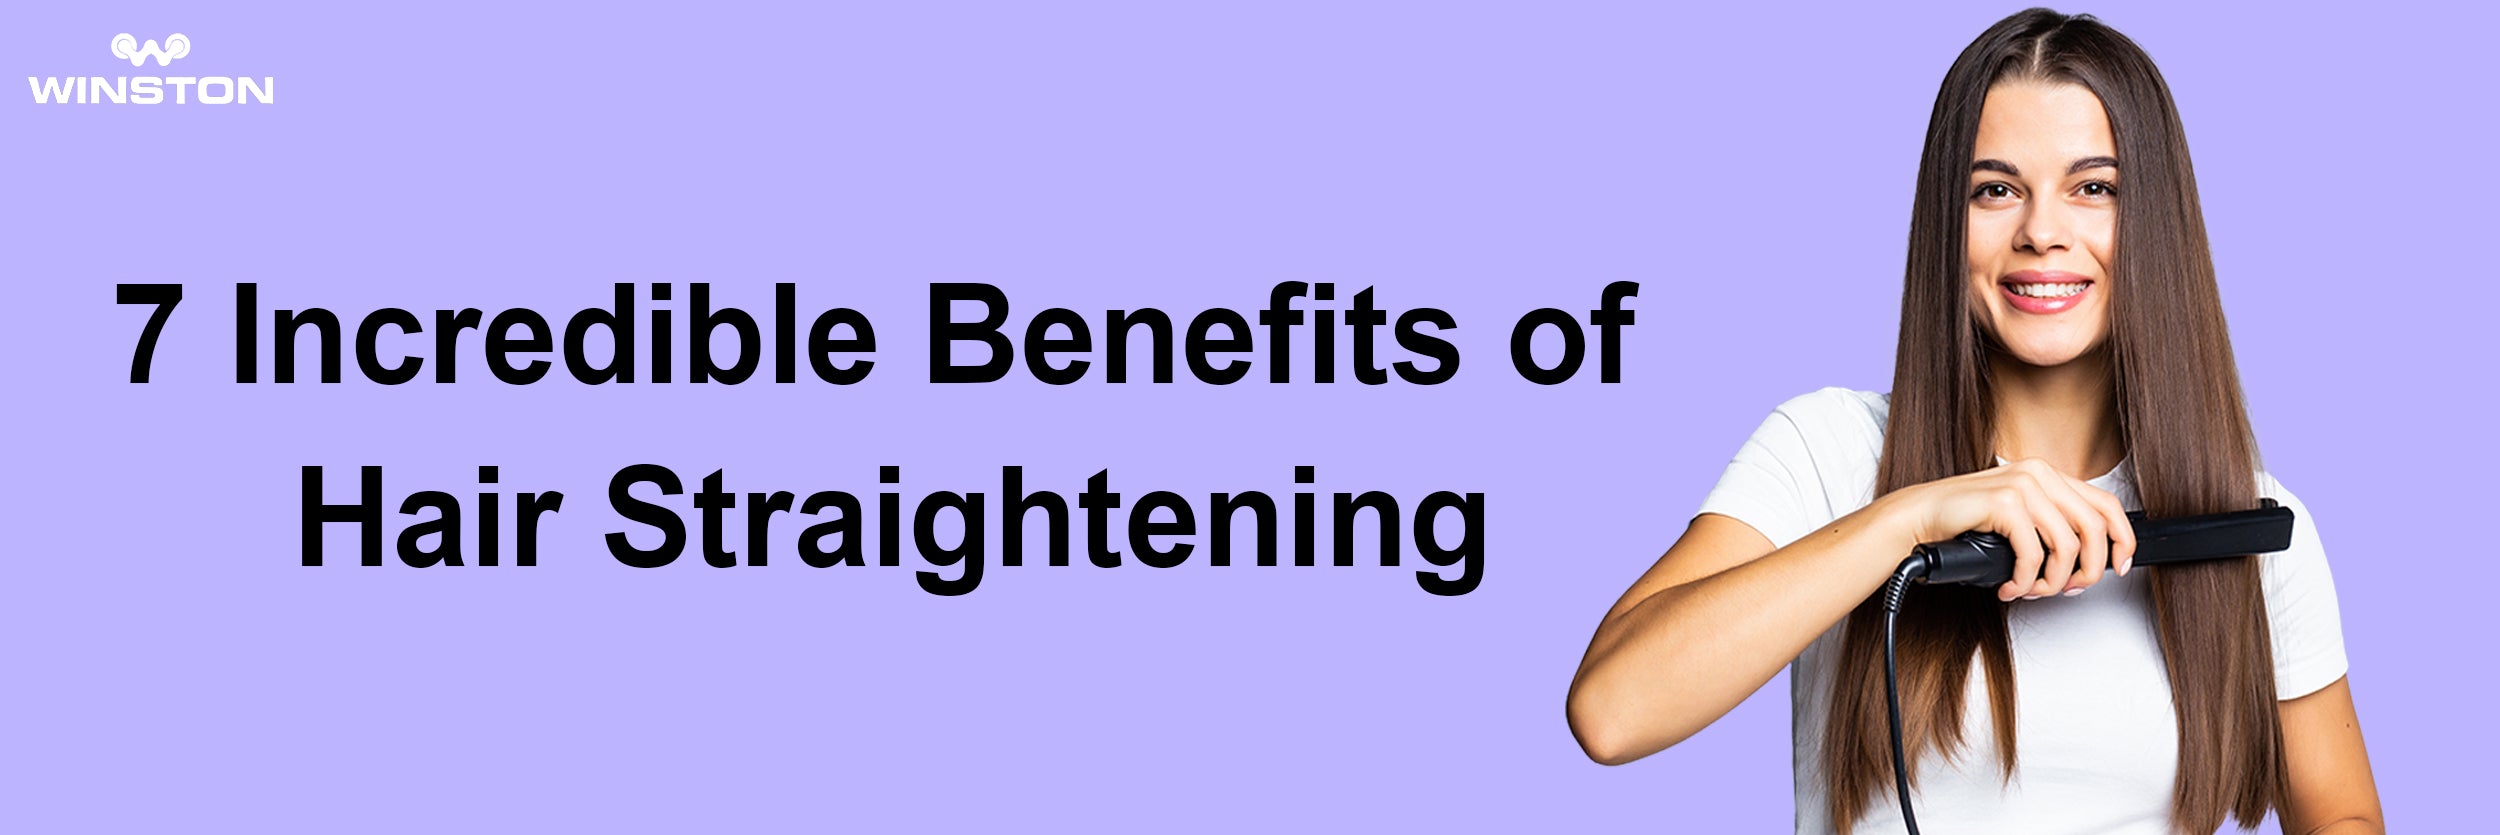 7 Incredible Benefits of Hair Straightening